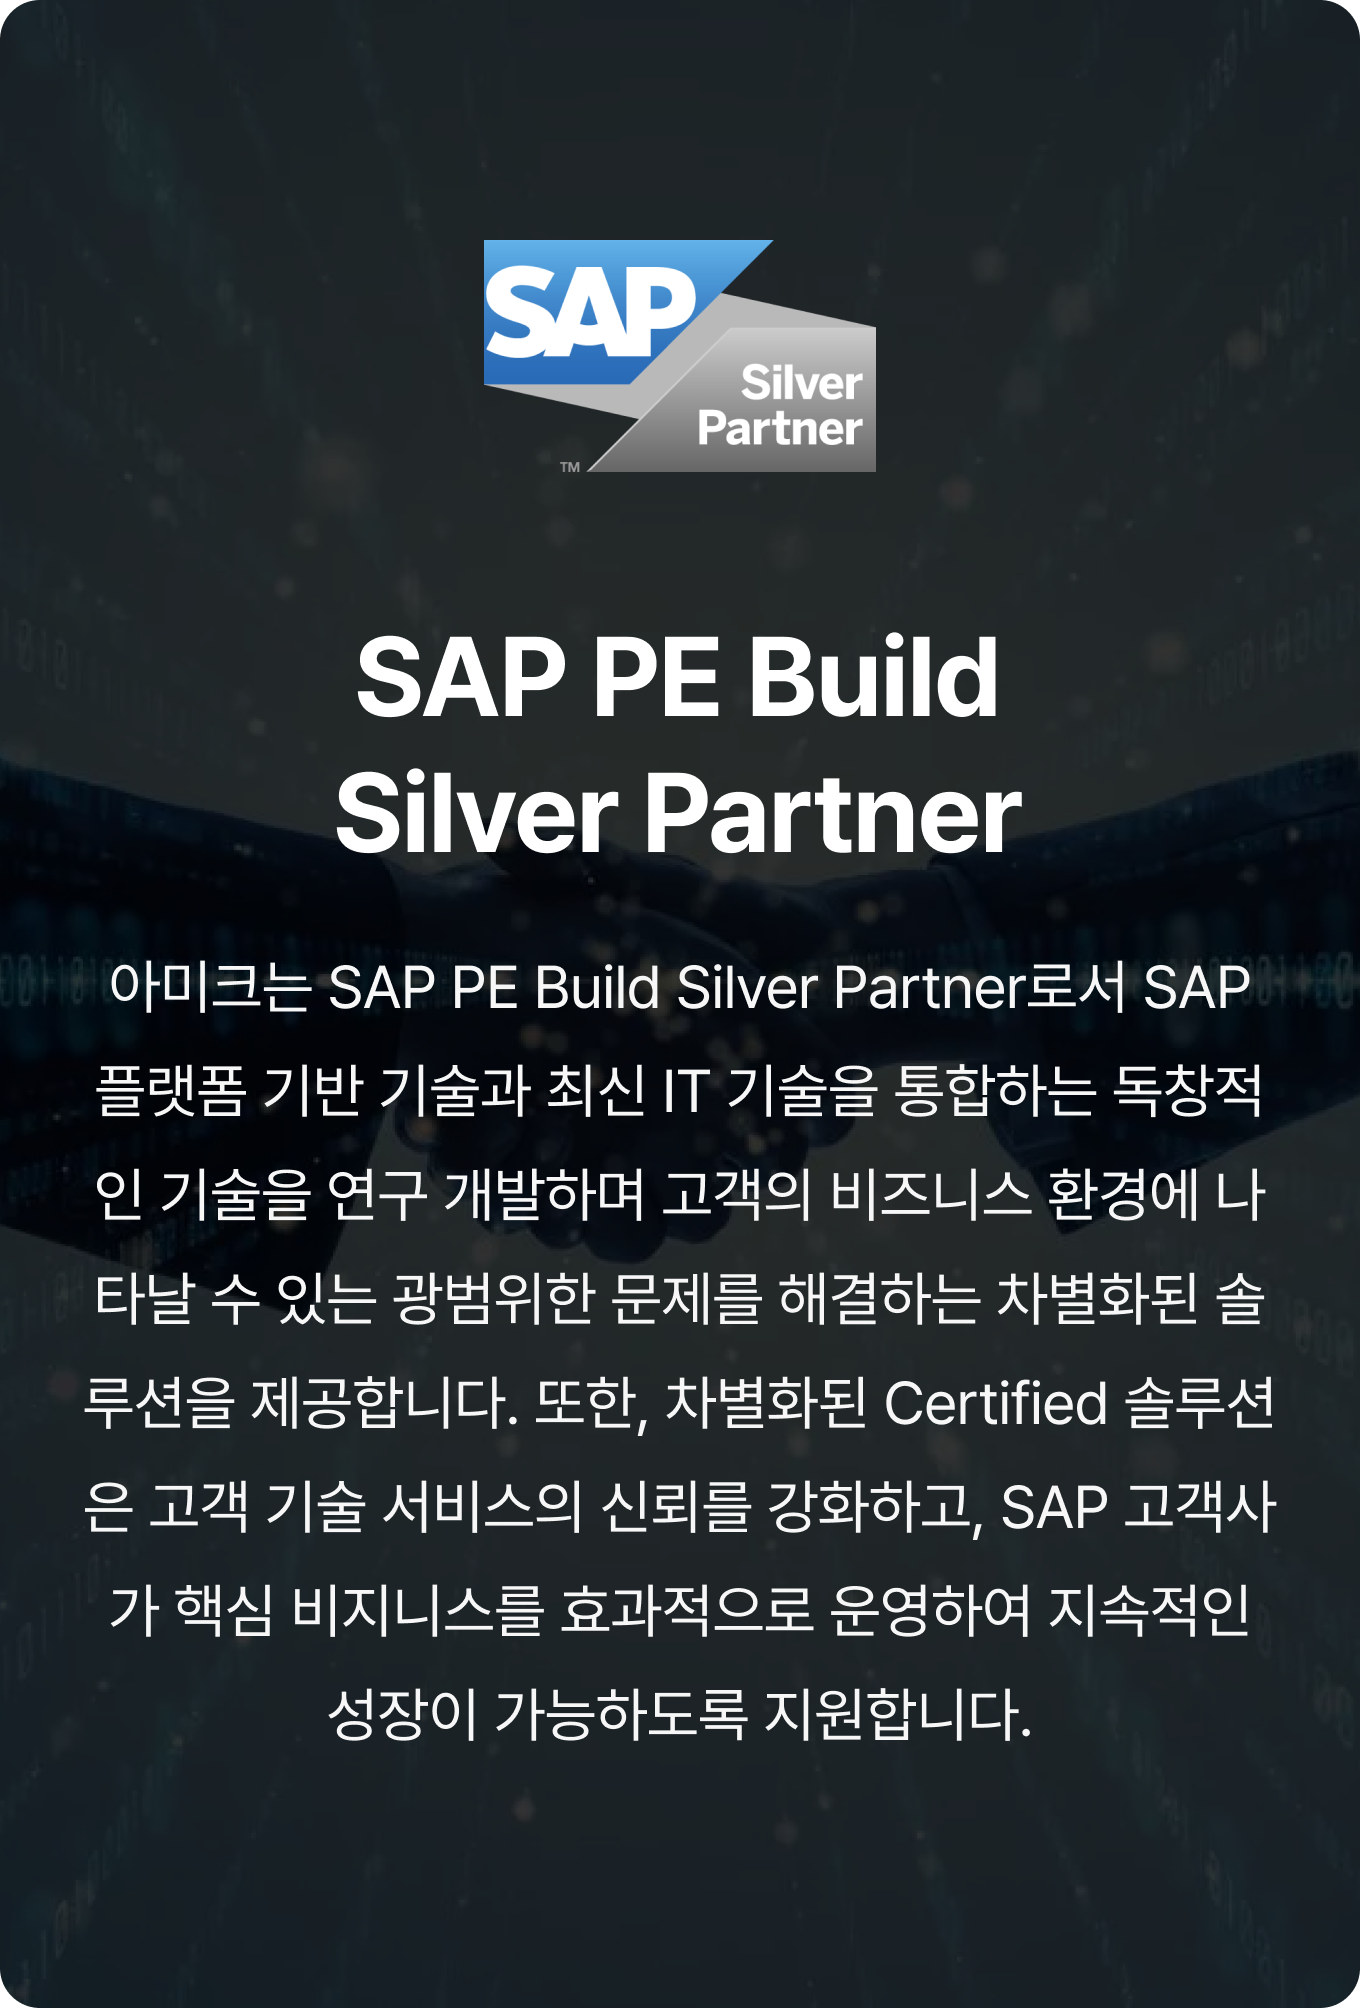 SAP PE Build Silver Partner, 아미크는 SAP PE Build Silver Partner로서 SAP 플랫폼 기반 기술과 최신 IT 기술을 통합하는 독창적인 기술을 연구 개발하며 고객의 비즈니스 환경에 나타날 수 있는 광범위한 문제를 해결하는 차별화된 솔루션을 제공합니다. 또한, 차별화된 Certified 솔루션은 고객 기술 서비스의 신뢰를 강화하고, SAP 고객사가 핵심 비지니스를 효과적으로 운영하여 지속적인 성장이 가능하도록 지원합니다.